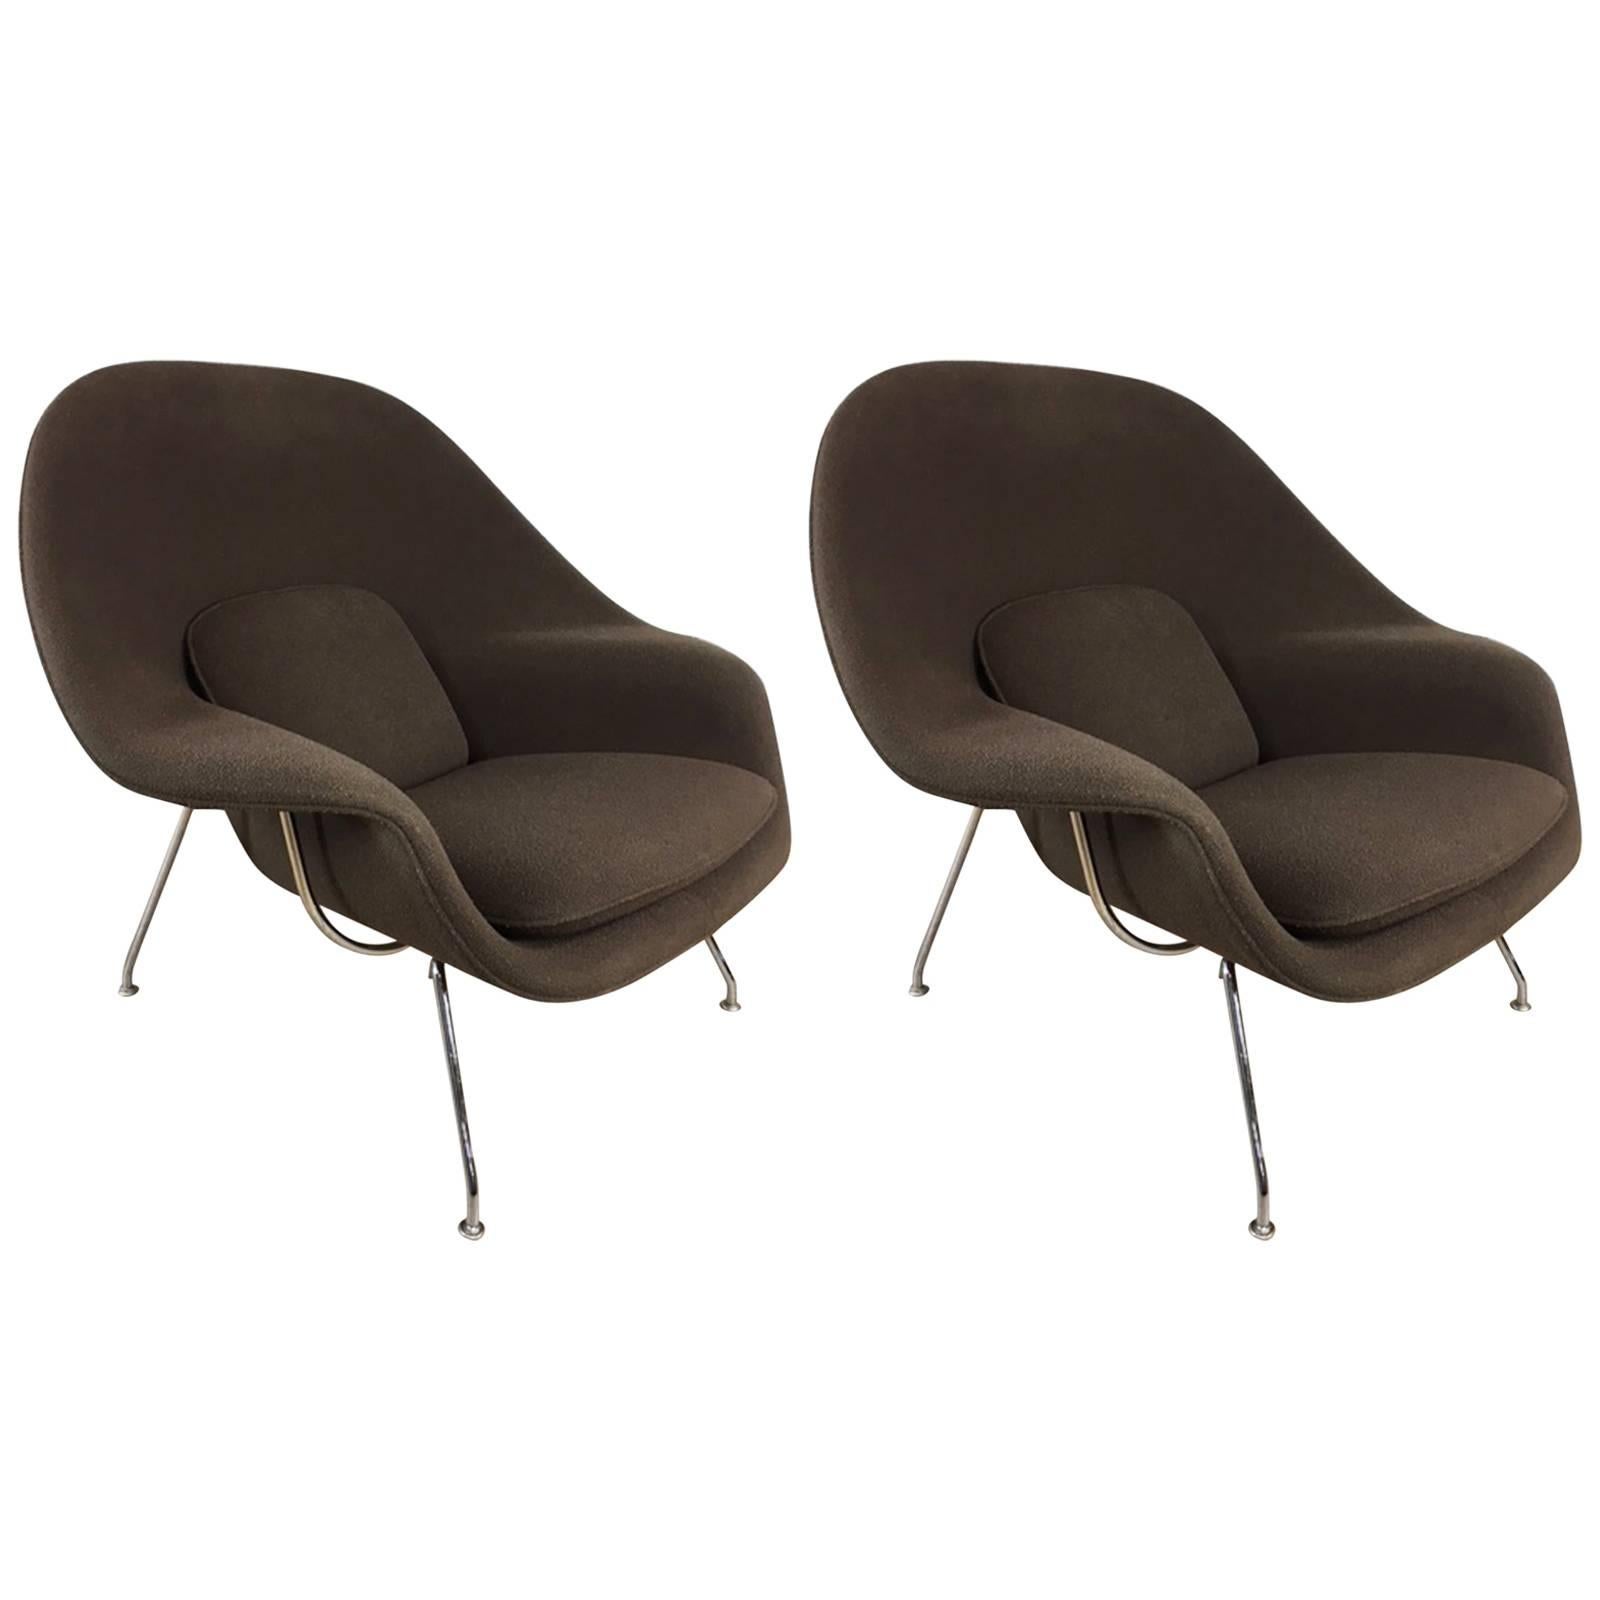 Eero Saarinen Womb Chair by Knoll - 1 Available 